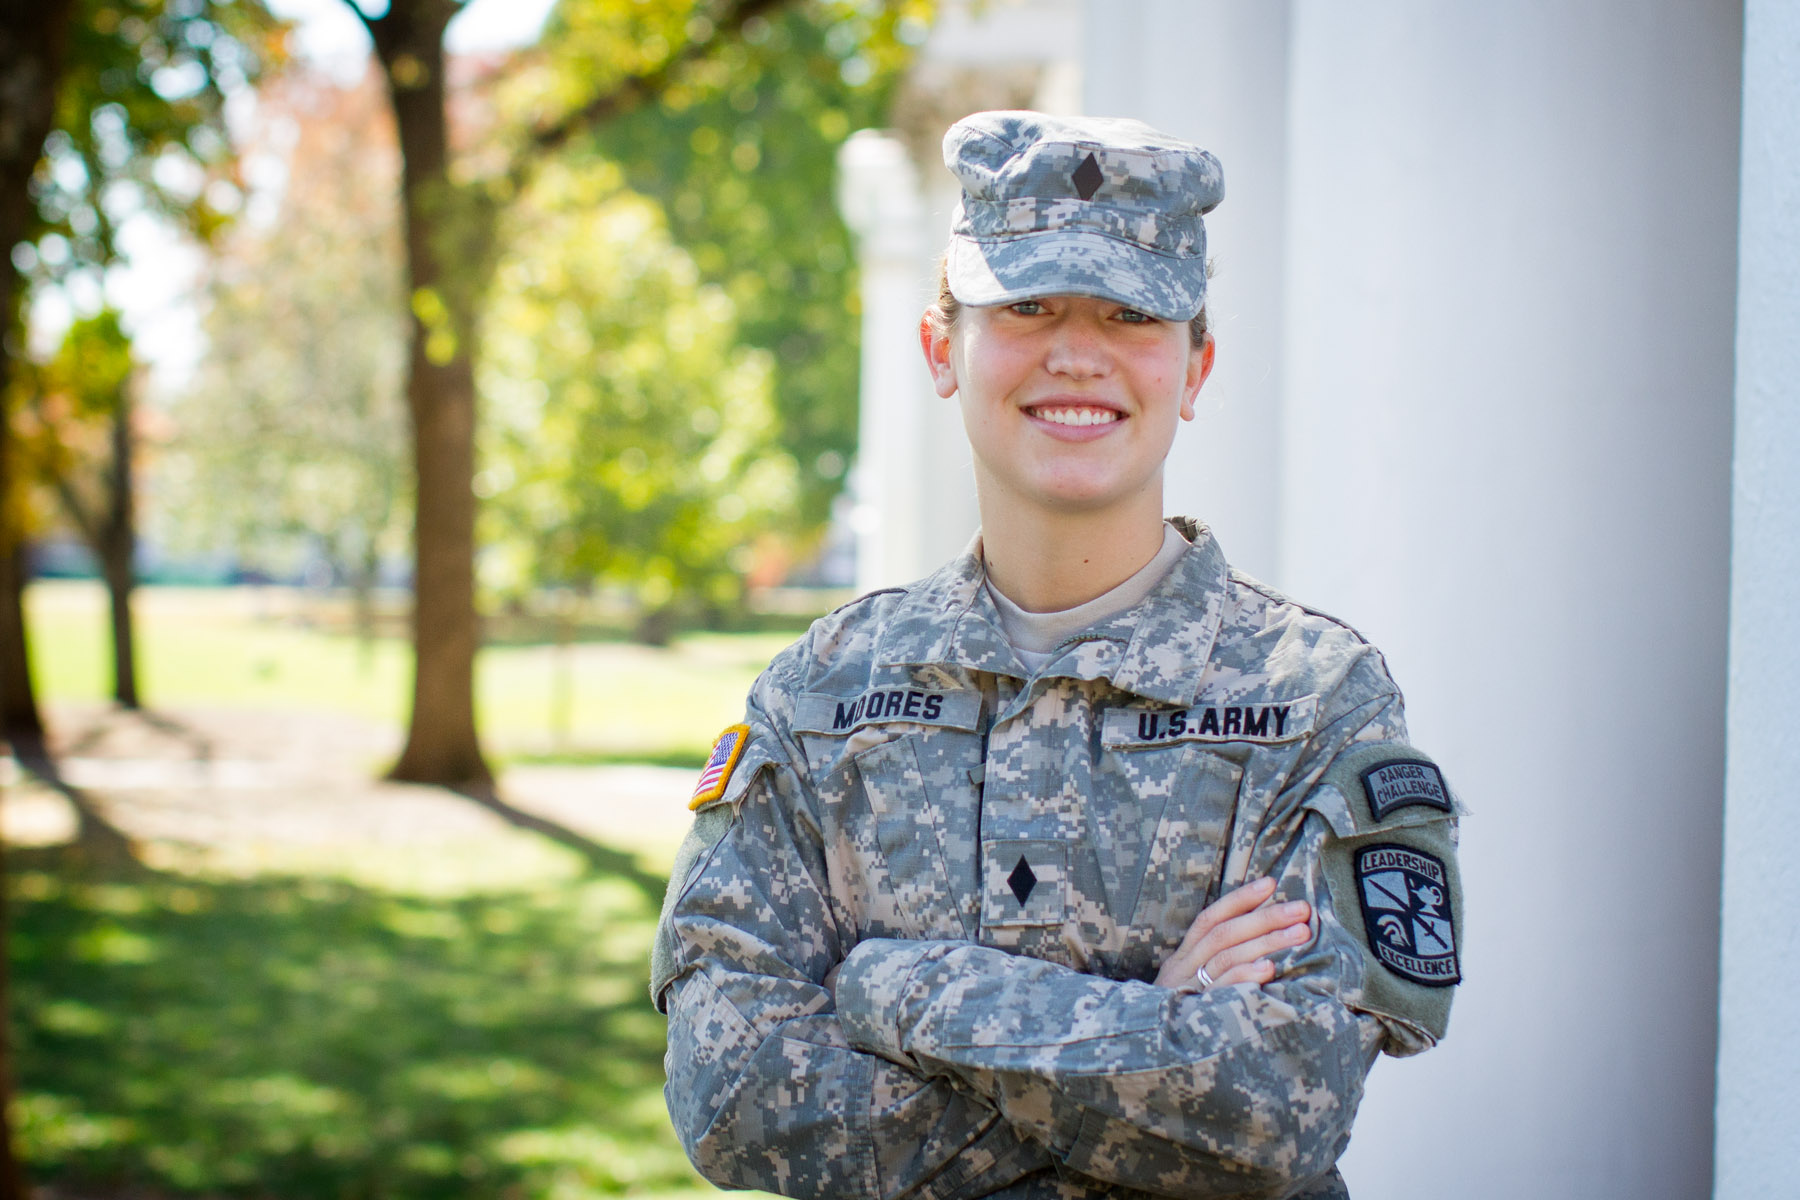 U.Va. ROTC Cadet Aimee Moores Headshot in USA Army Uniform